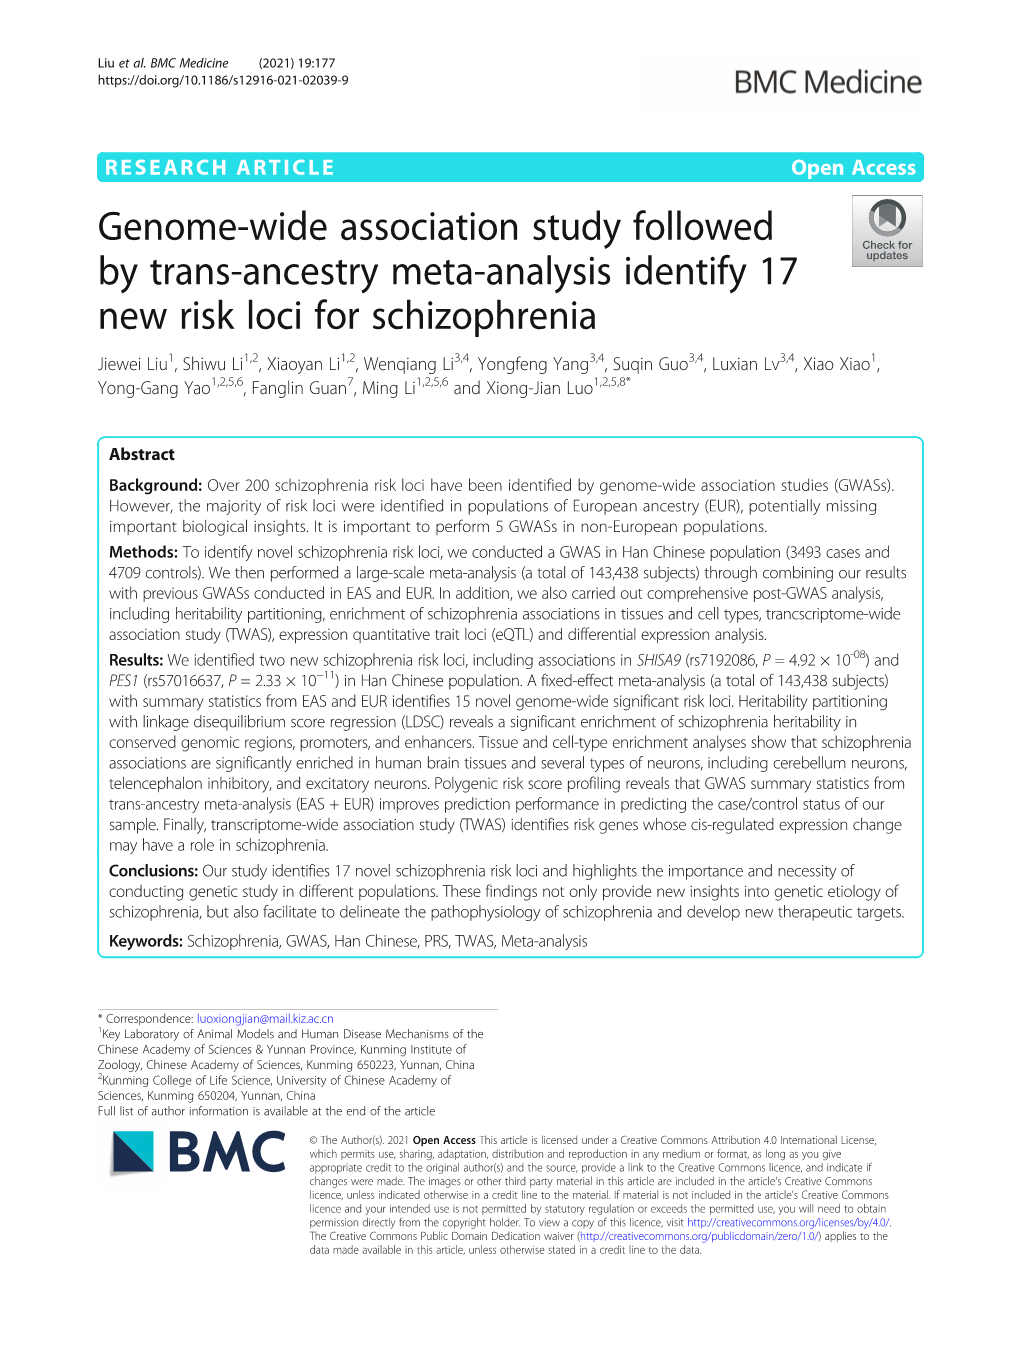 Genome-Wide Association Study Followed by Trans-Ancestry Meta-Analysis Identify 17 New Risk Loci for Schizophrenia